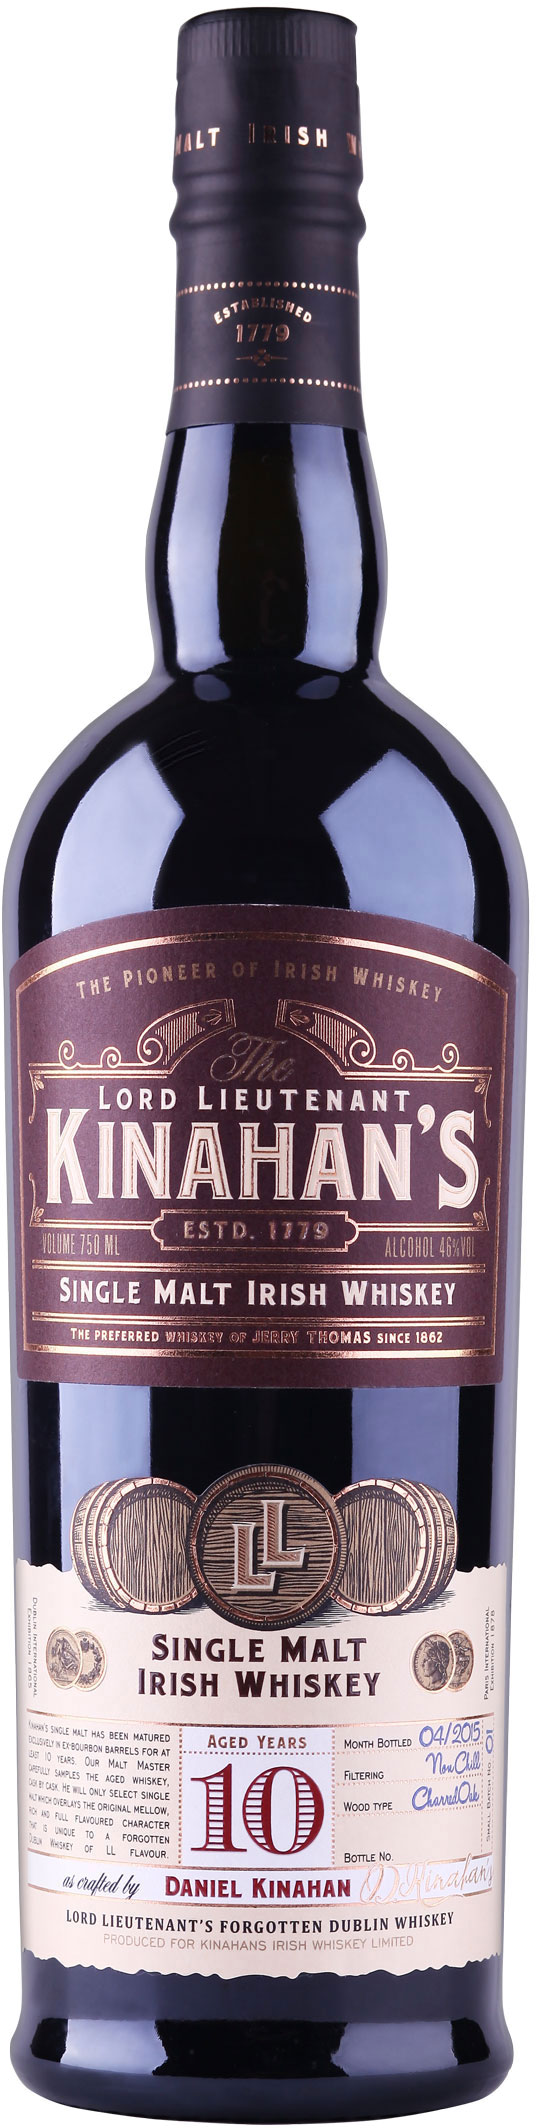 THE LORD LIEUTENANT KINAHAN'S IRISH WHISKEY LED SIGN~ NEW in BOX ~ 23"X20"X2 " 